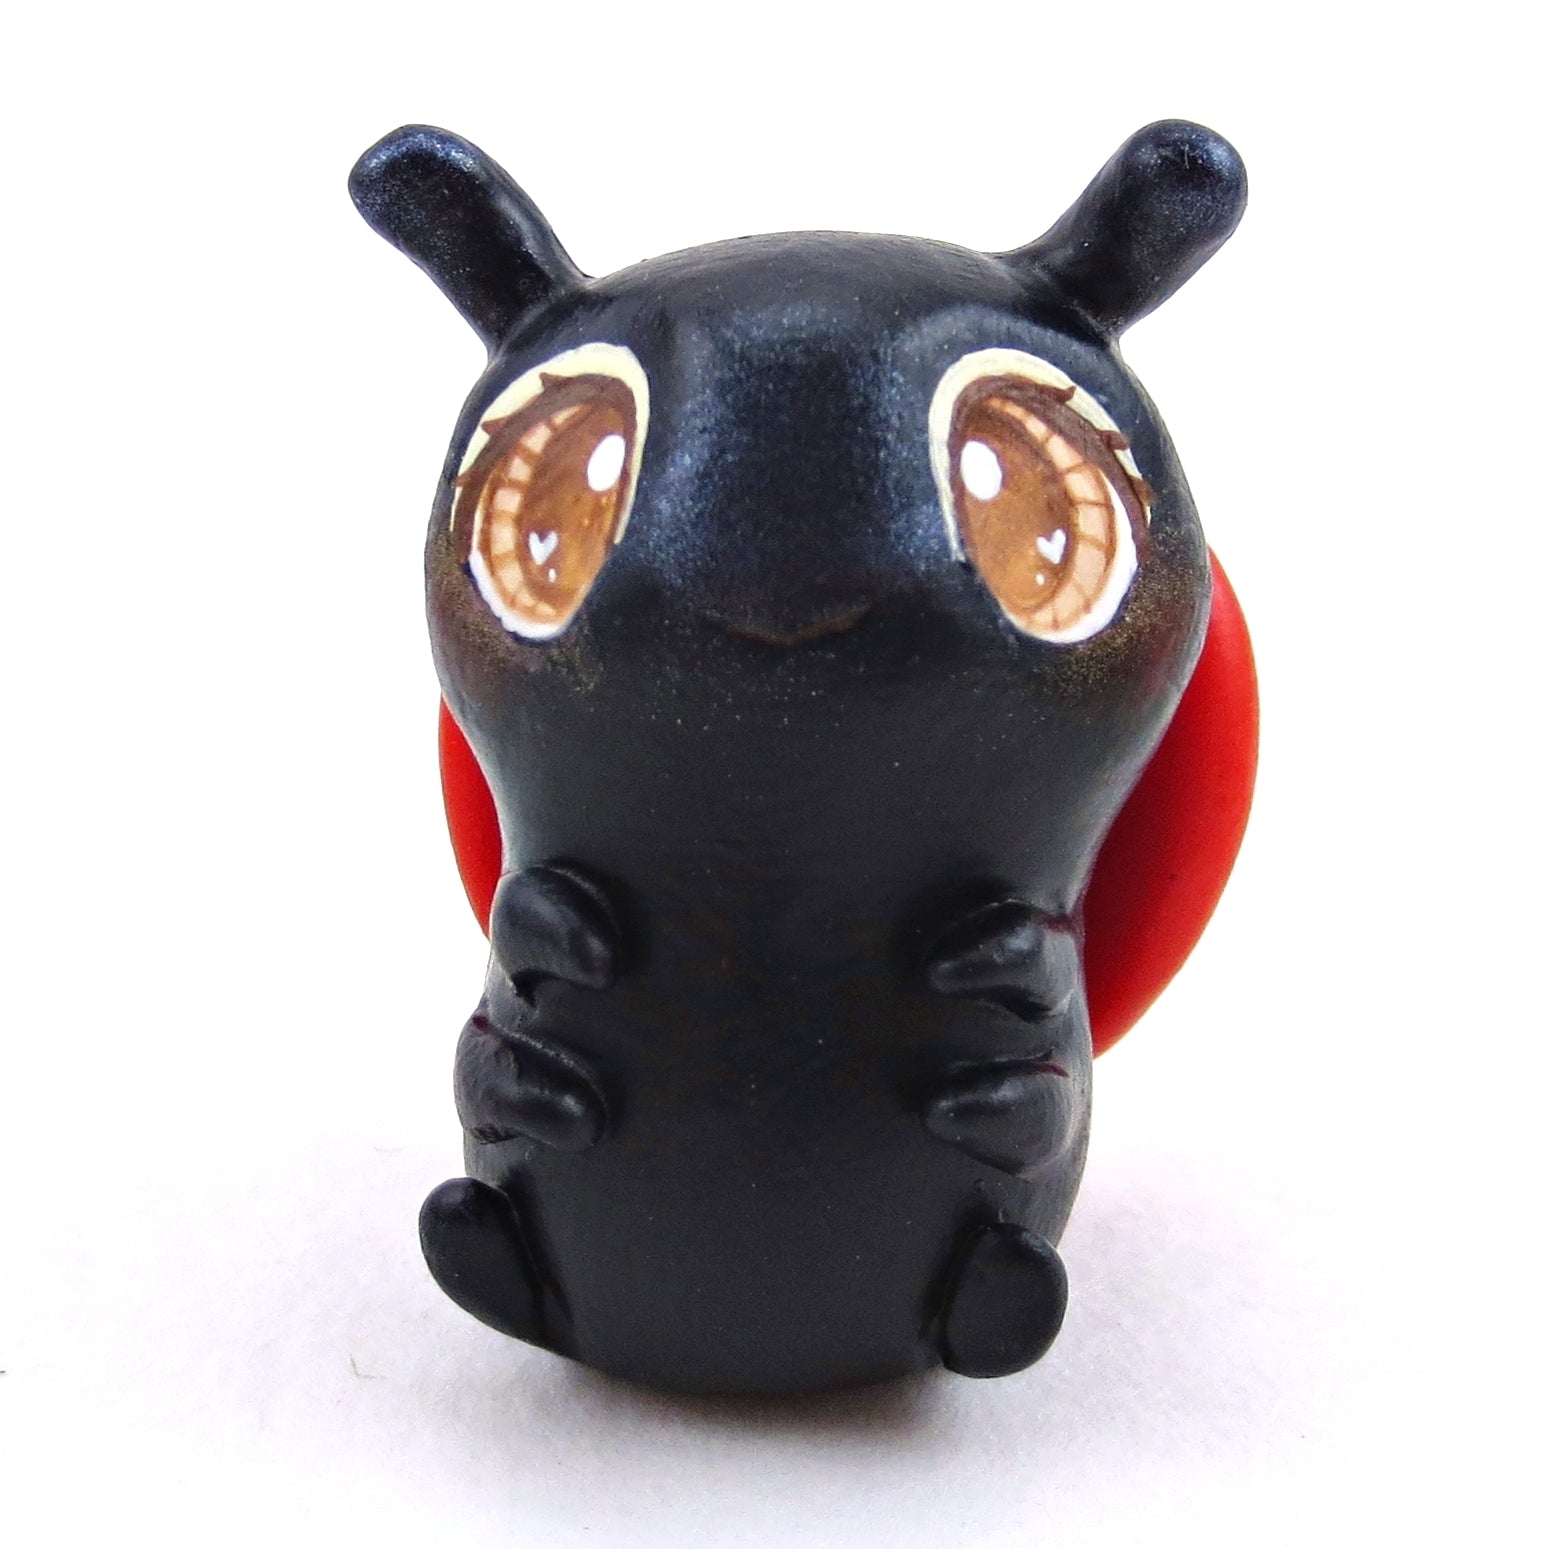 Brown-Eyed Ladybug Figurine - Polymer Clay Animals Valentine Collection